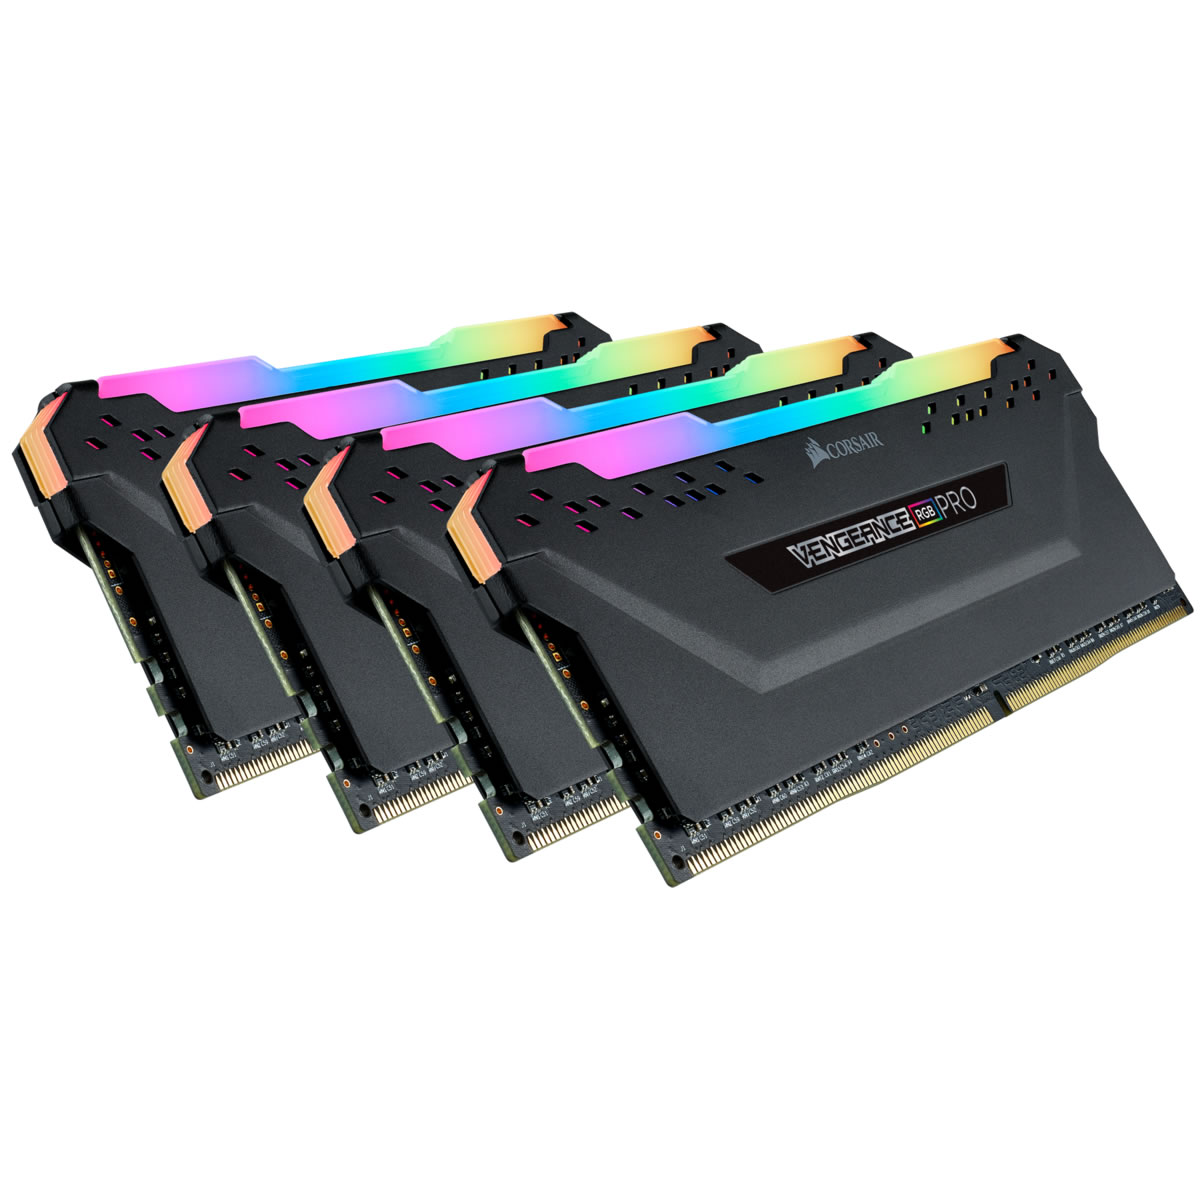 Corsair Vengeance RGB Pro 128GB (4x32GB) DDR4 PC4-25600C16 3200MHz Quad Channel Kit (CMW128GX4M4E3200C16)